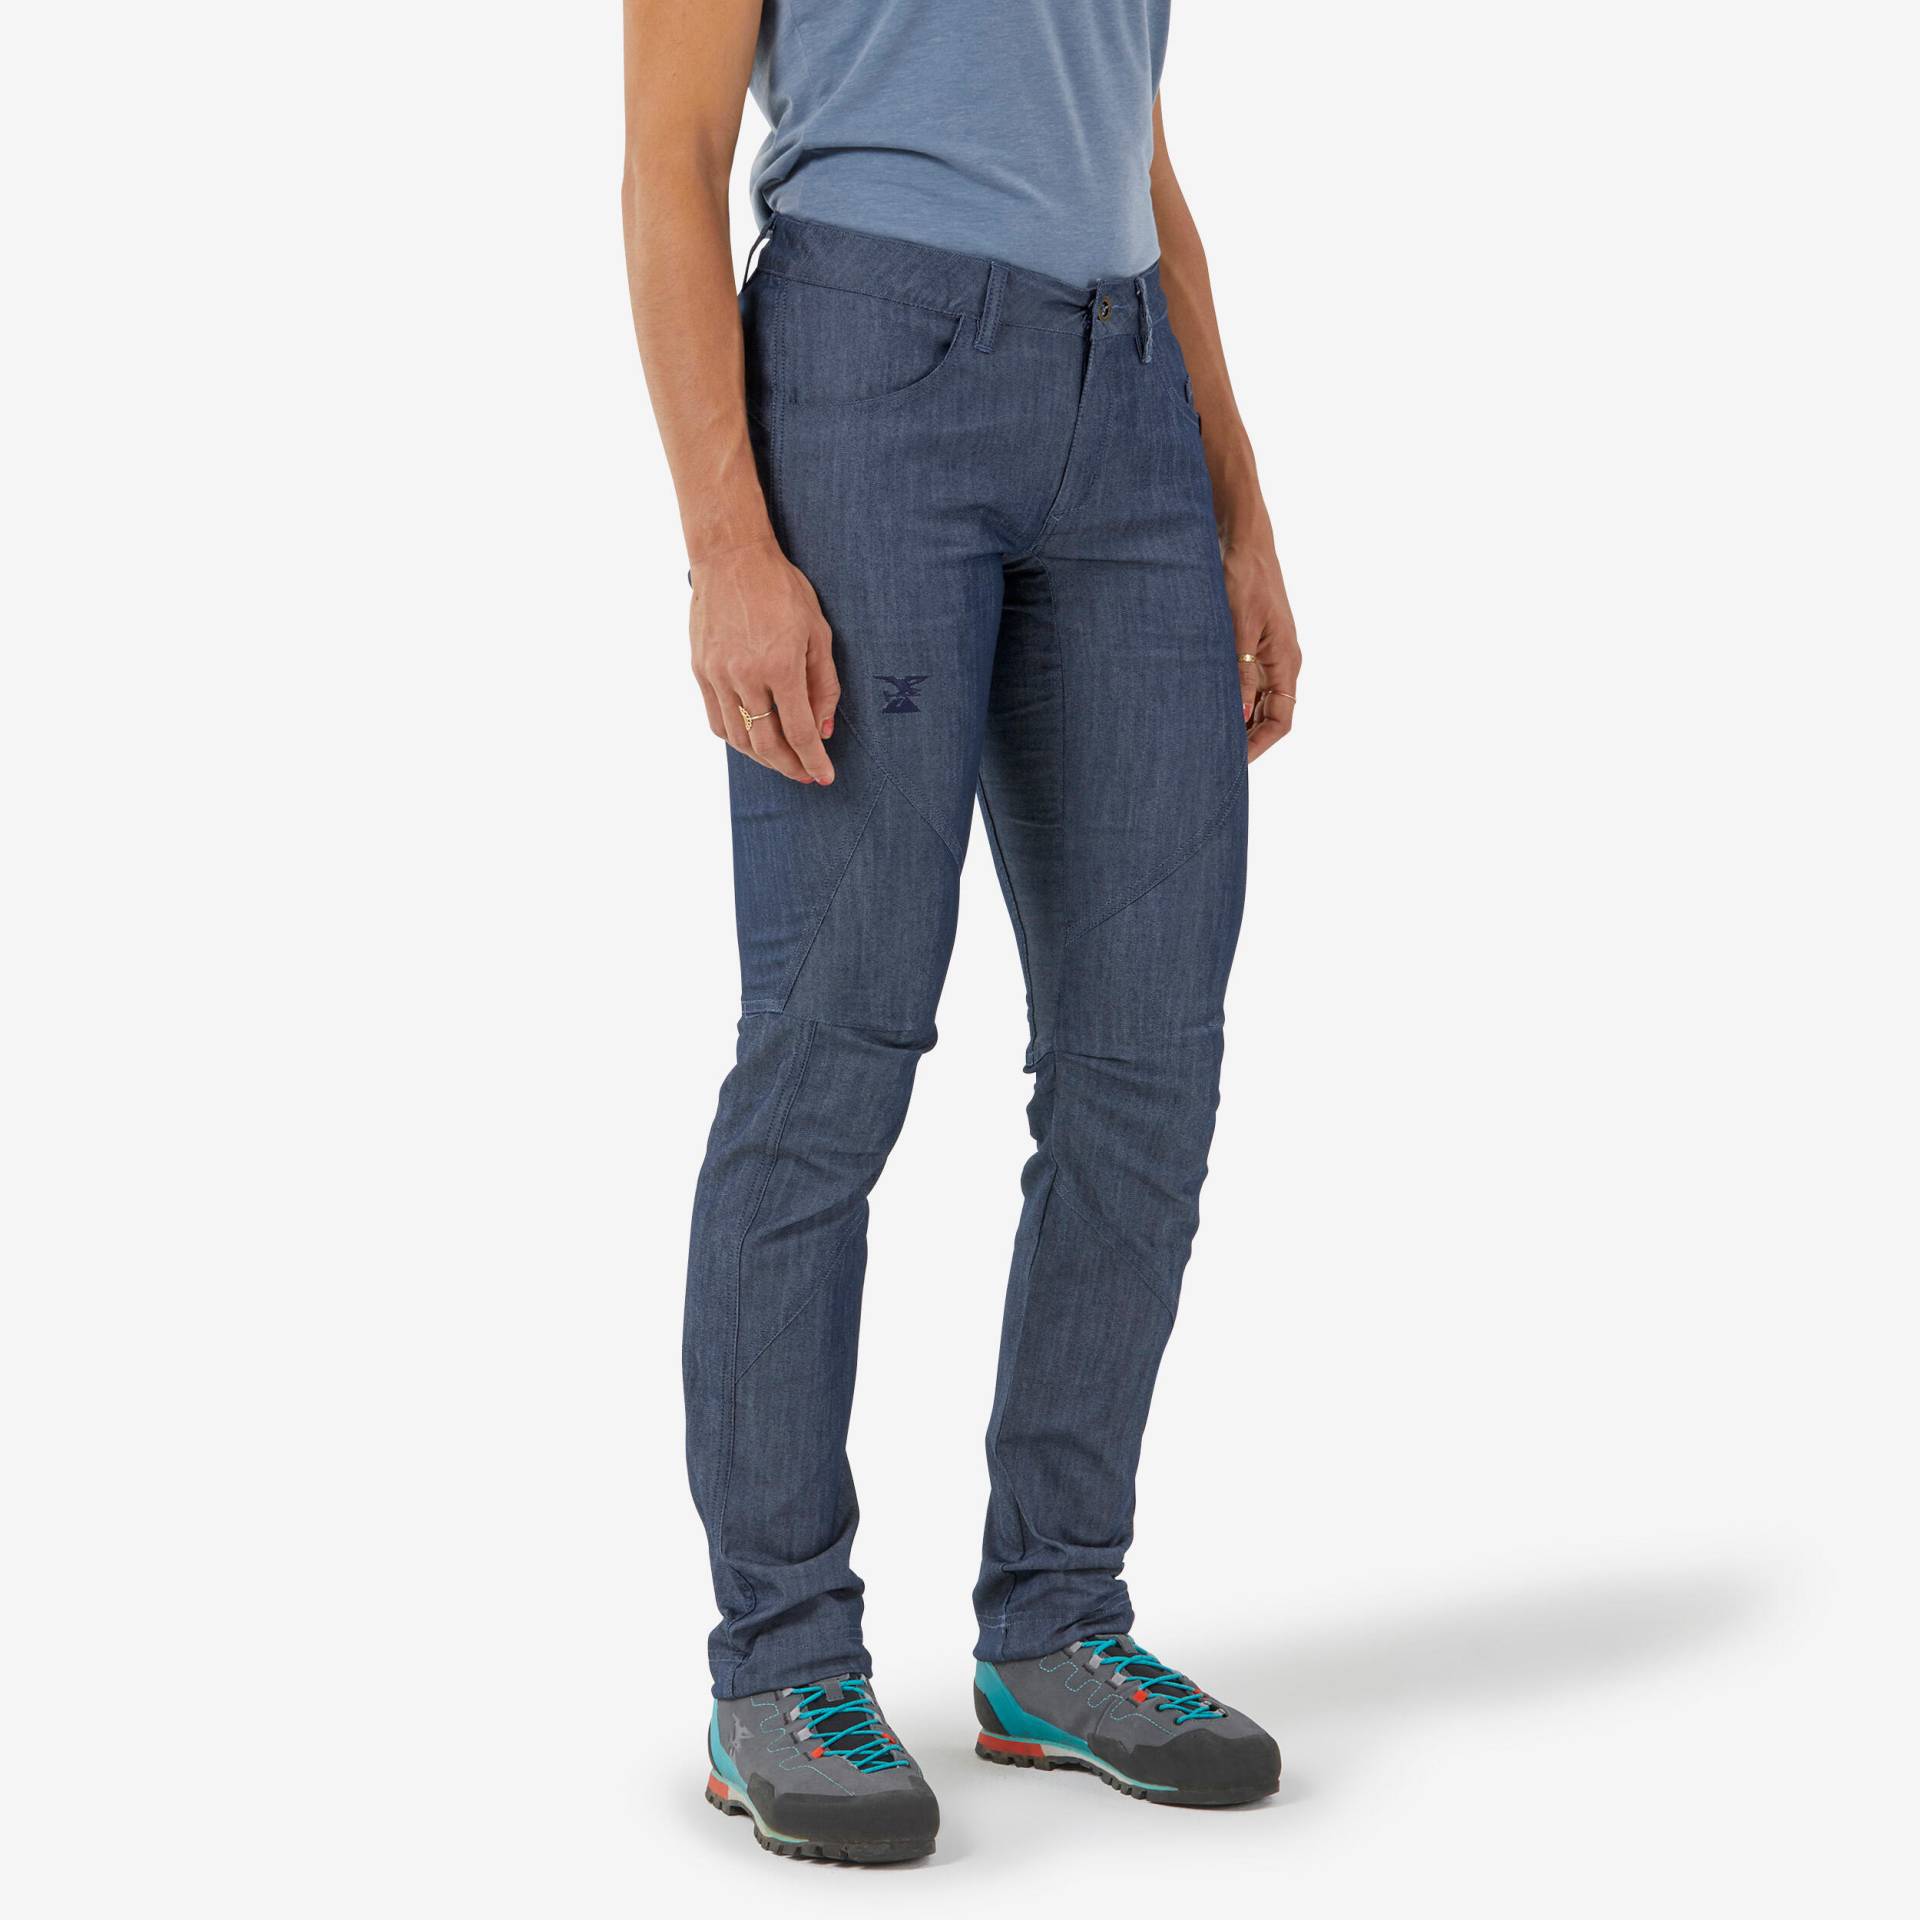 Kletterhose Damen Jeans Stretch - Vertika V2 von SIMOND